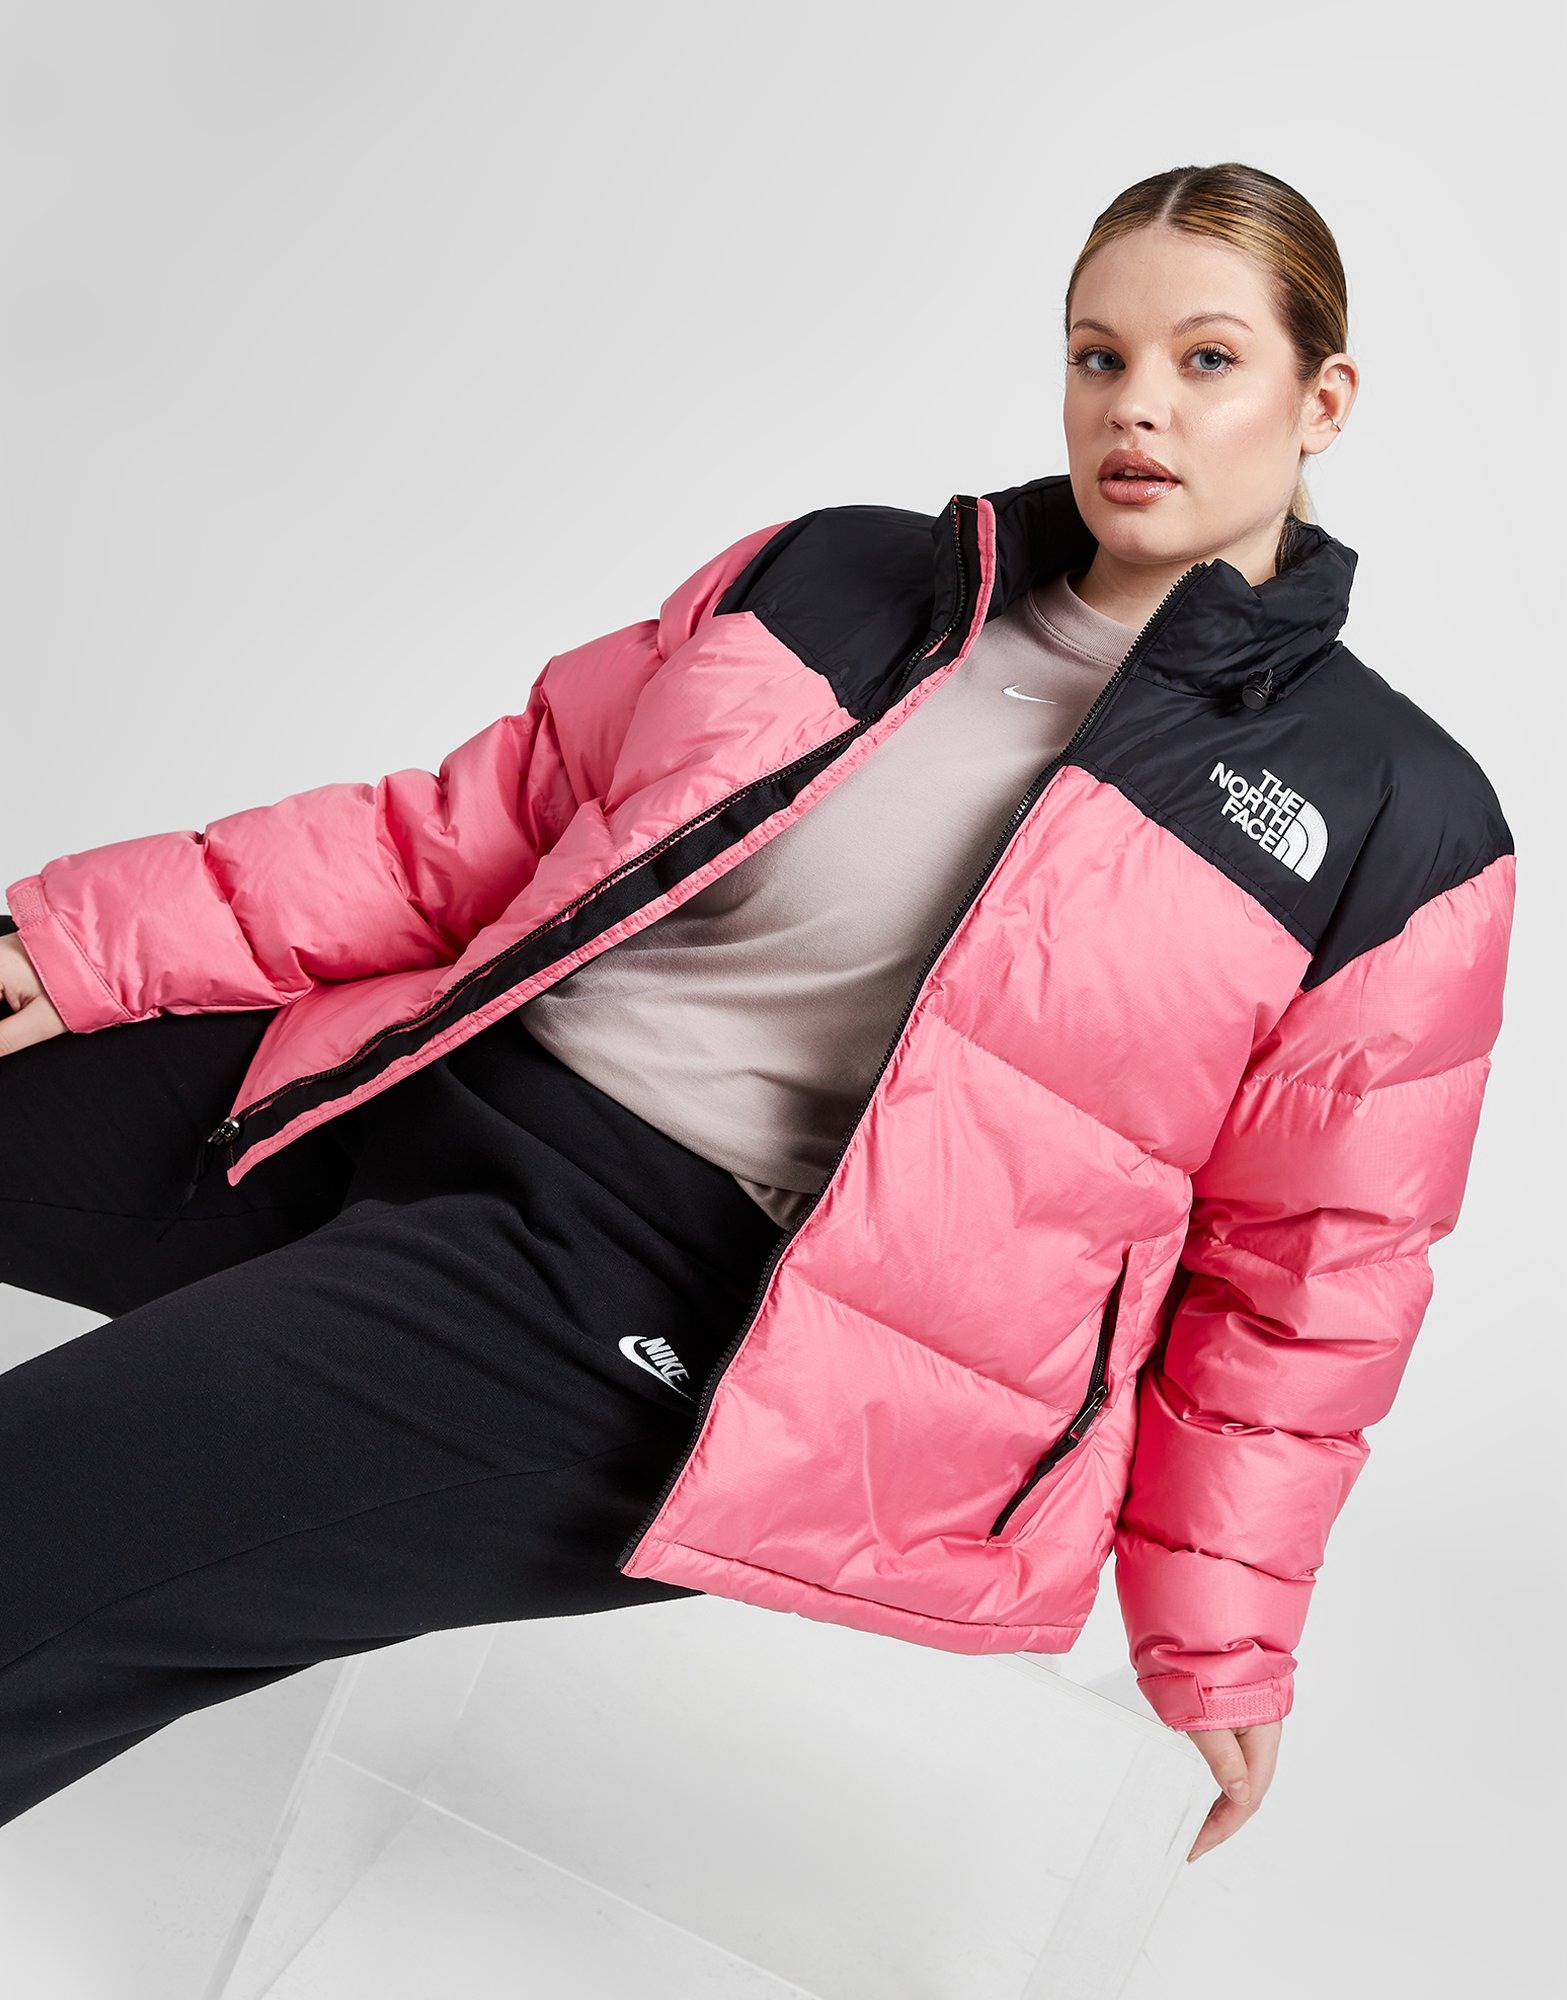 Cierto Shetland danés The North Face chaqueta 1996 Nuptse Plus Size en Rosa | JD Sports España